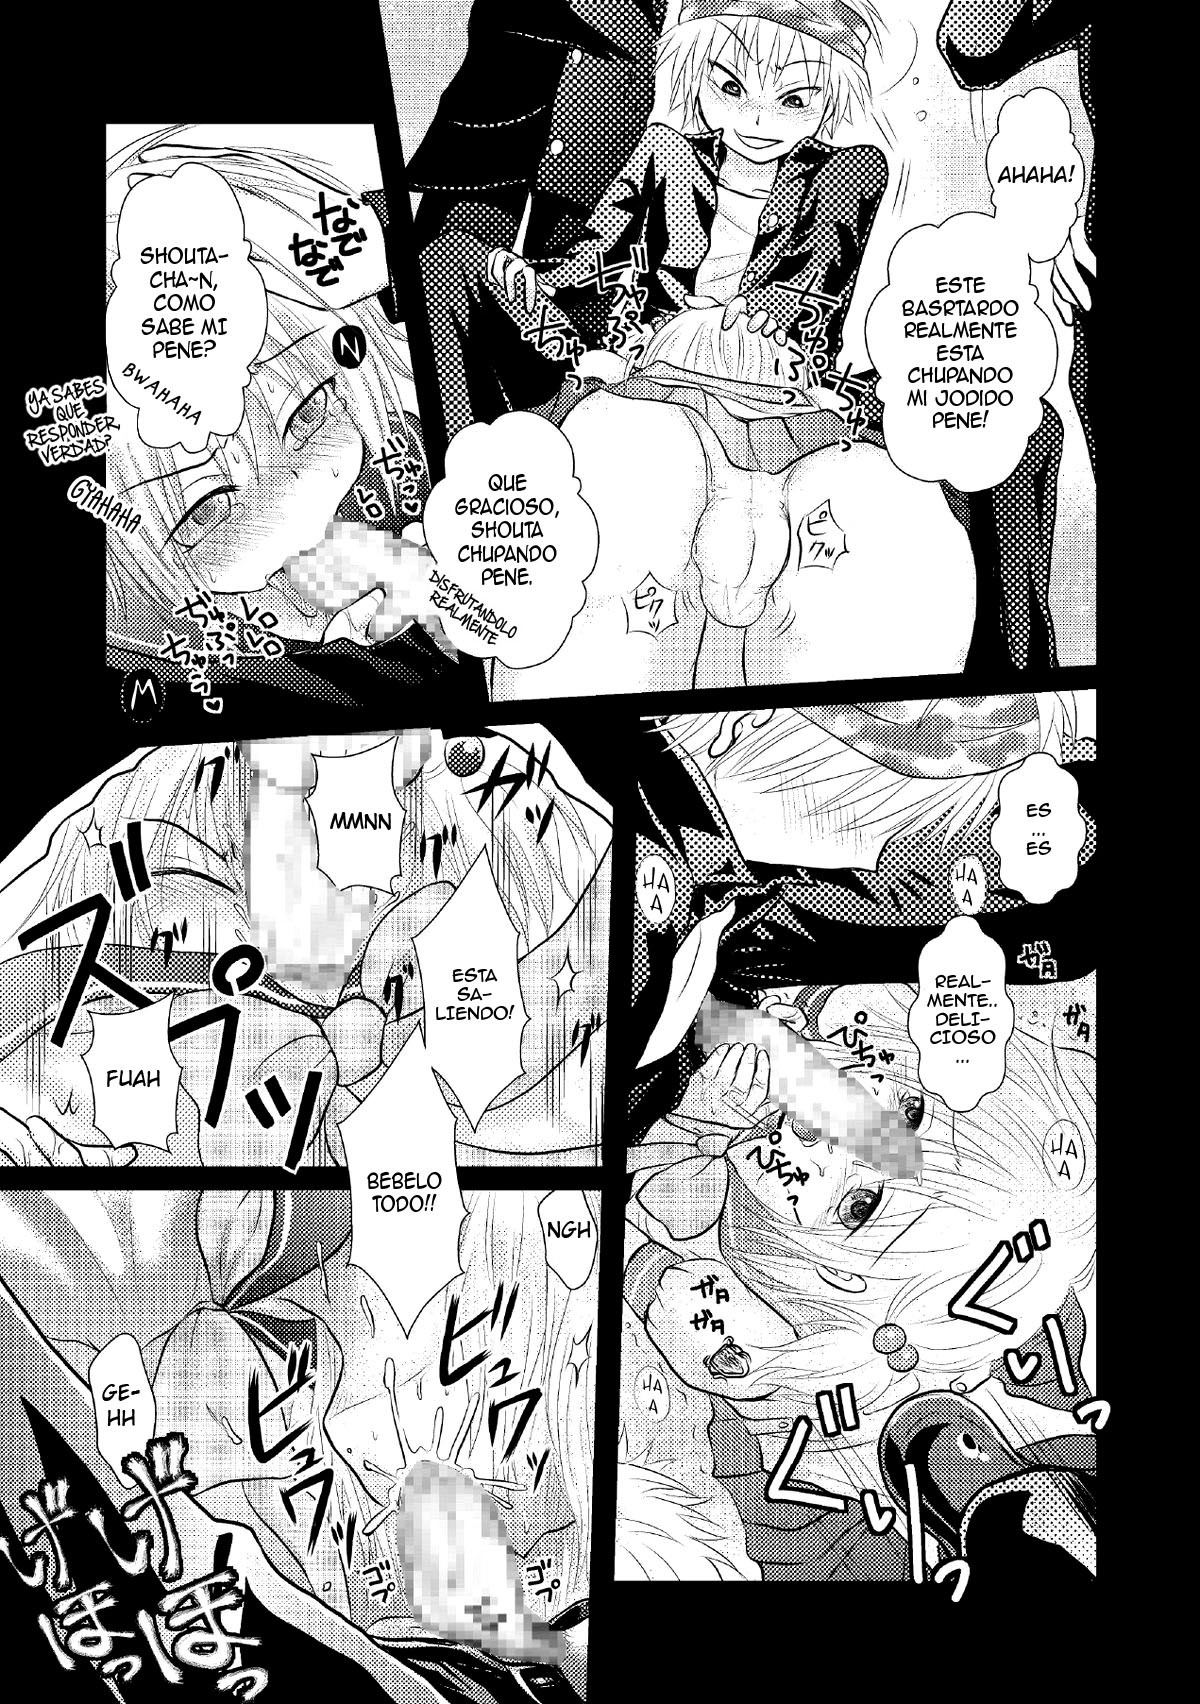 Crossdresser Knight [Manga] [Crossdresser] [Futanari]